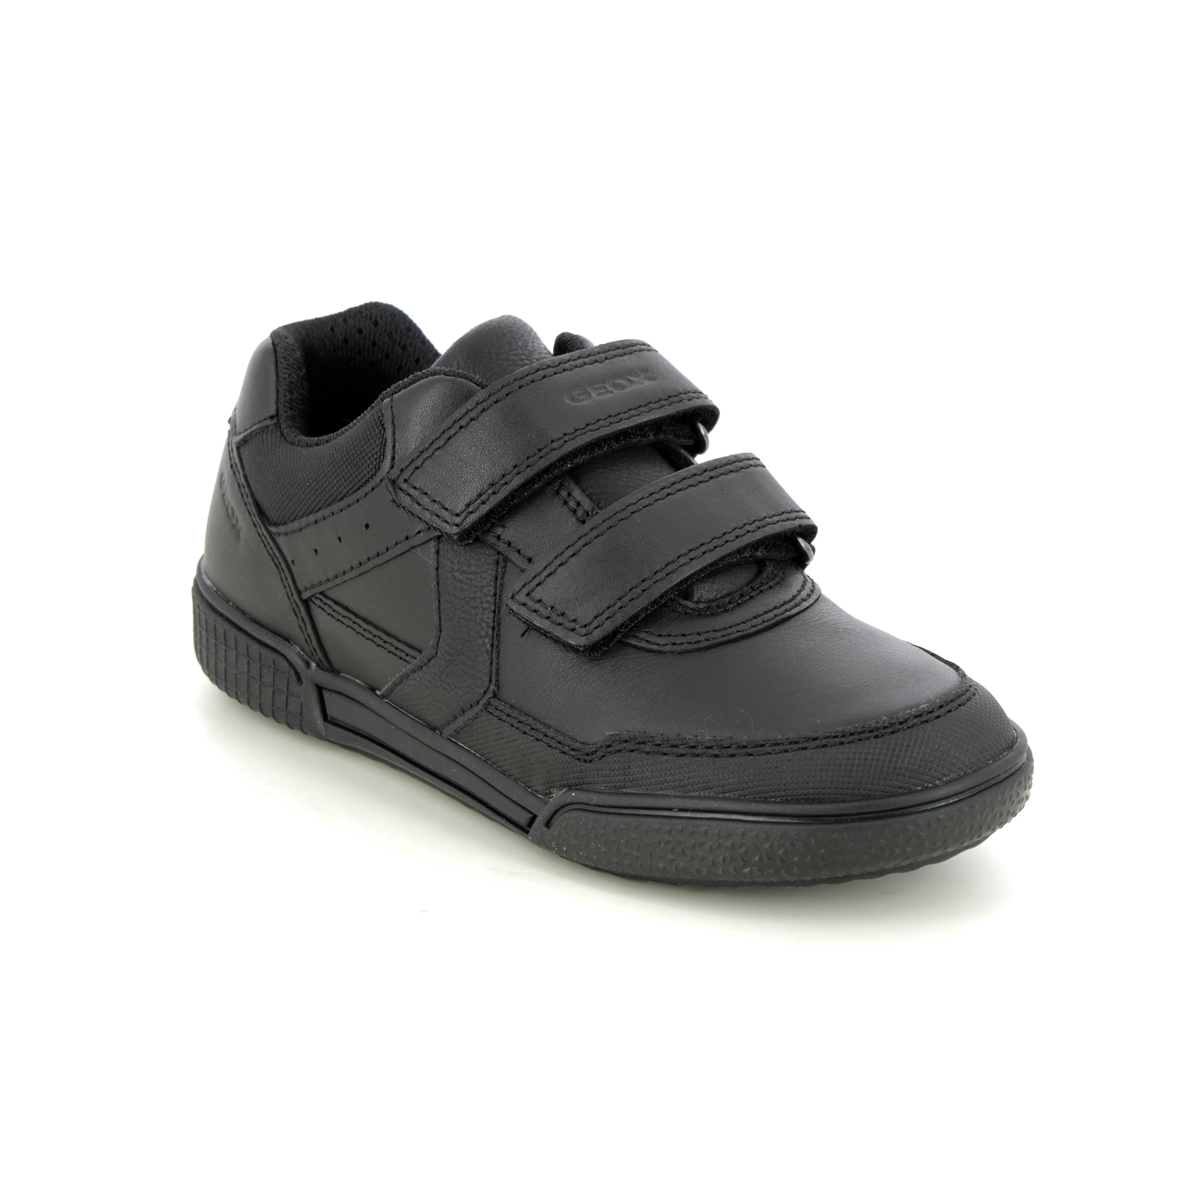 Geox - Poseido Boy 2V (Black Leather) J02Bca-C9999 In Size 34 In Plain Black Leather For School For kids